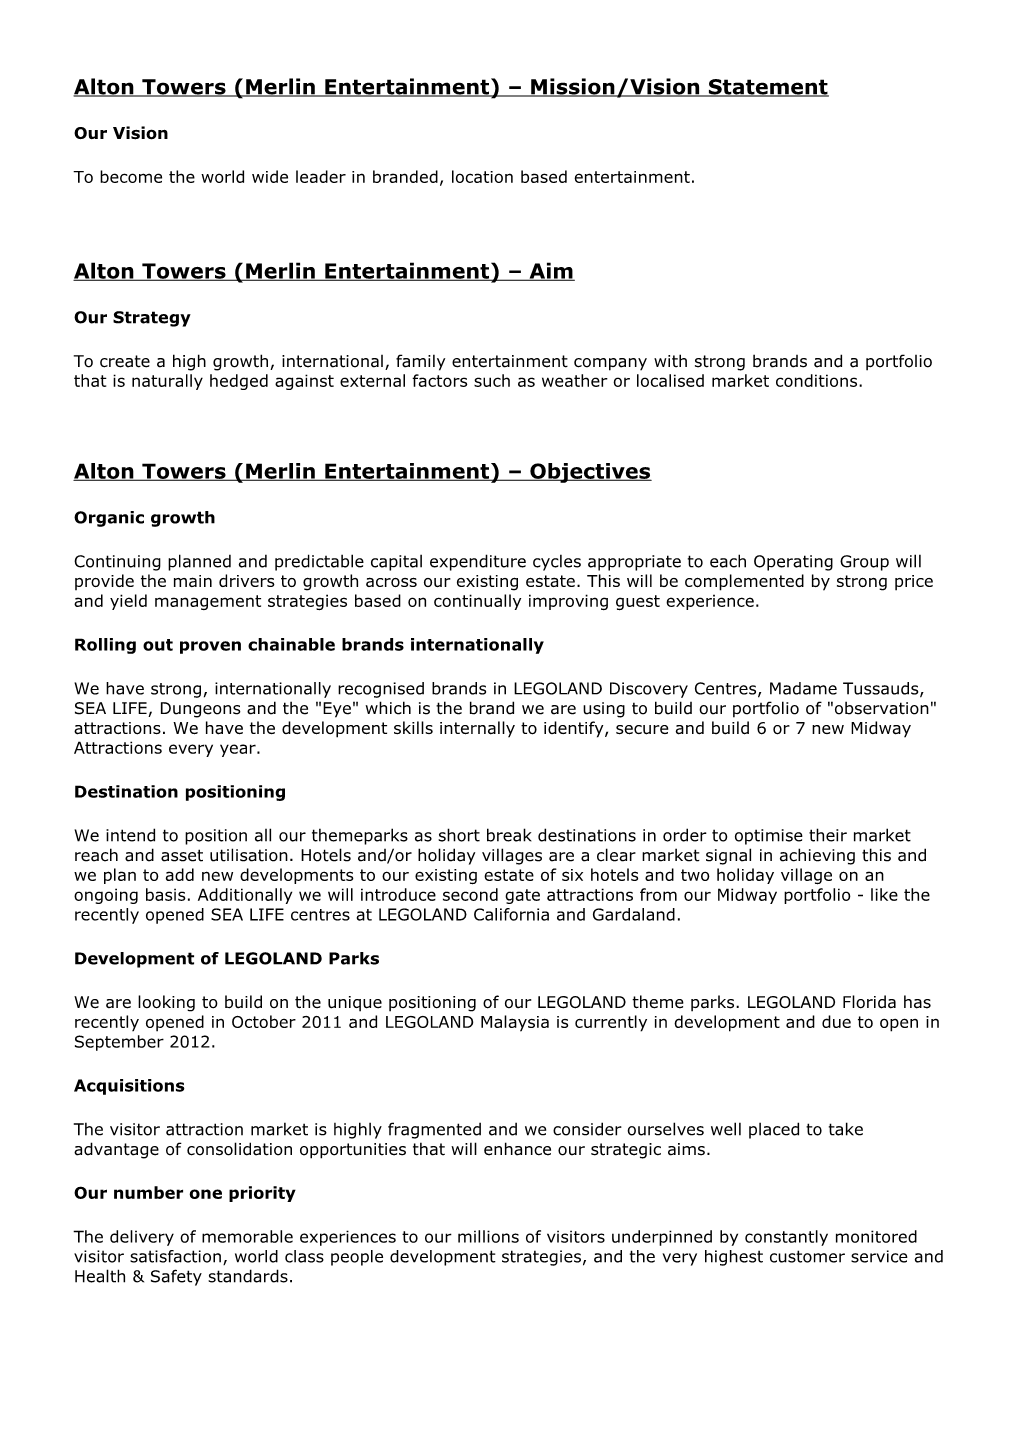 Alton Towers (Merlin Entertainment) Mission/Vision Statement